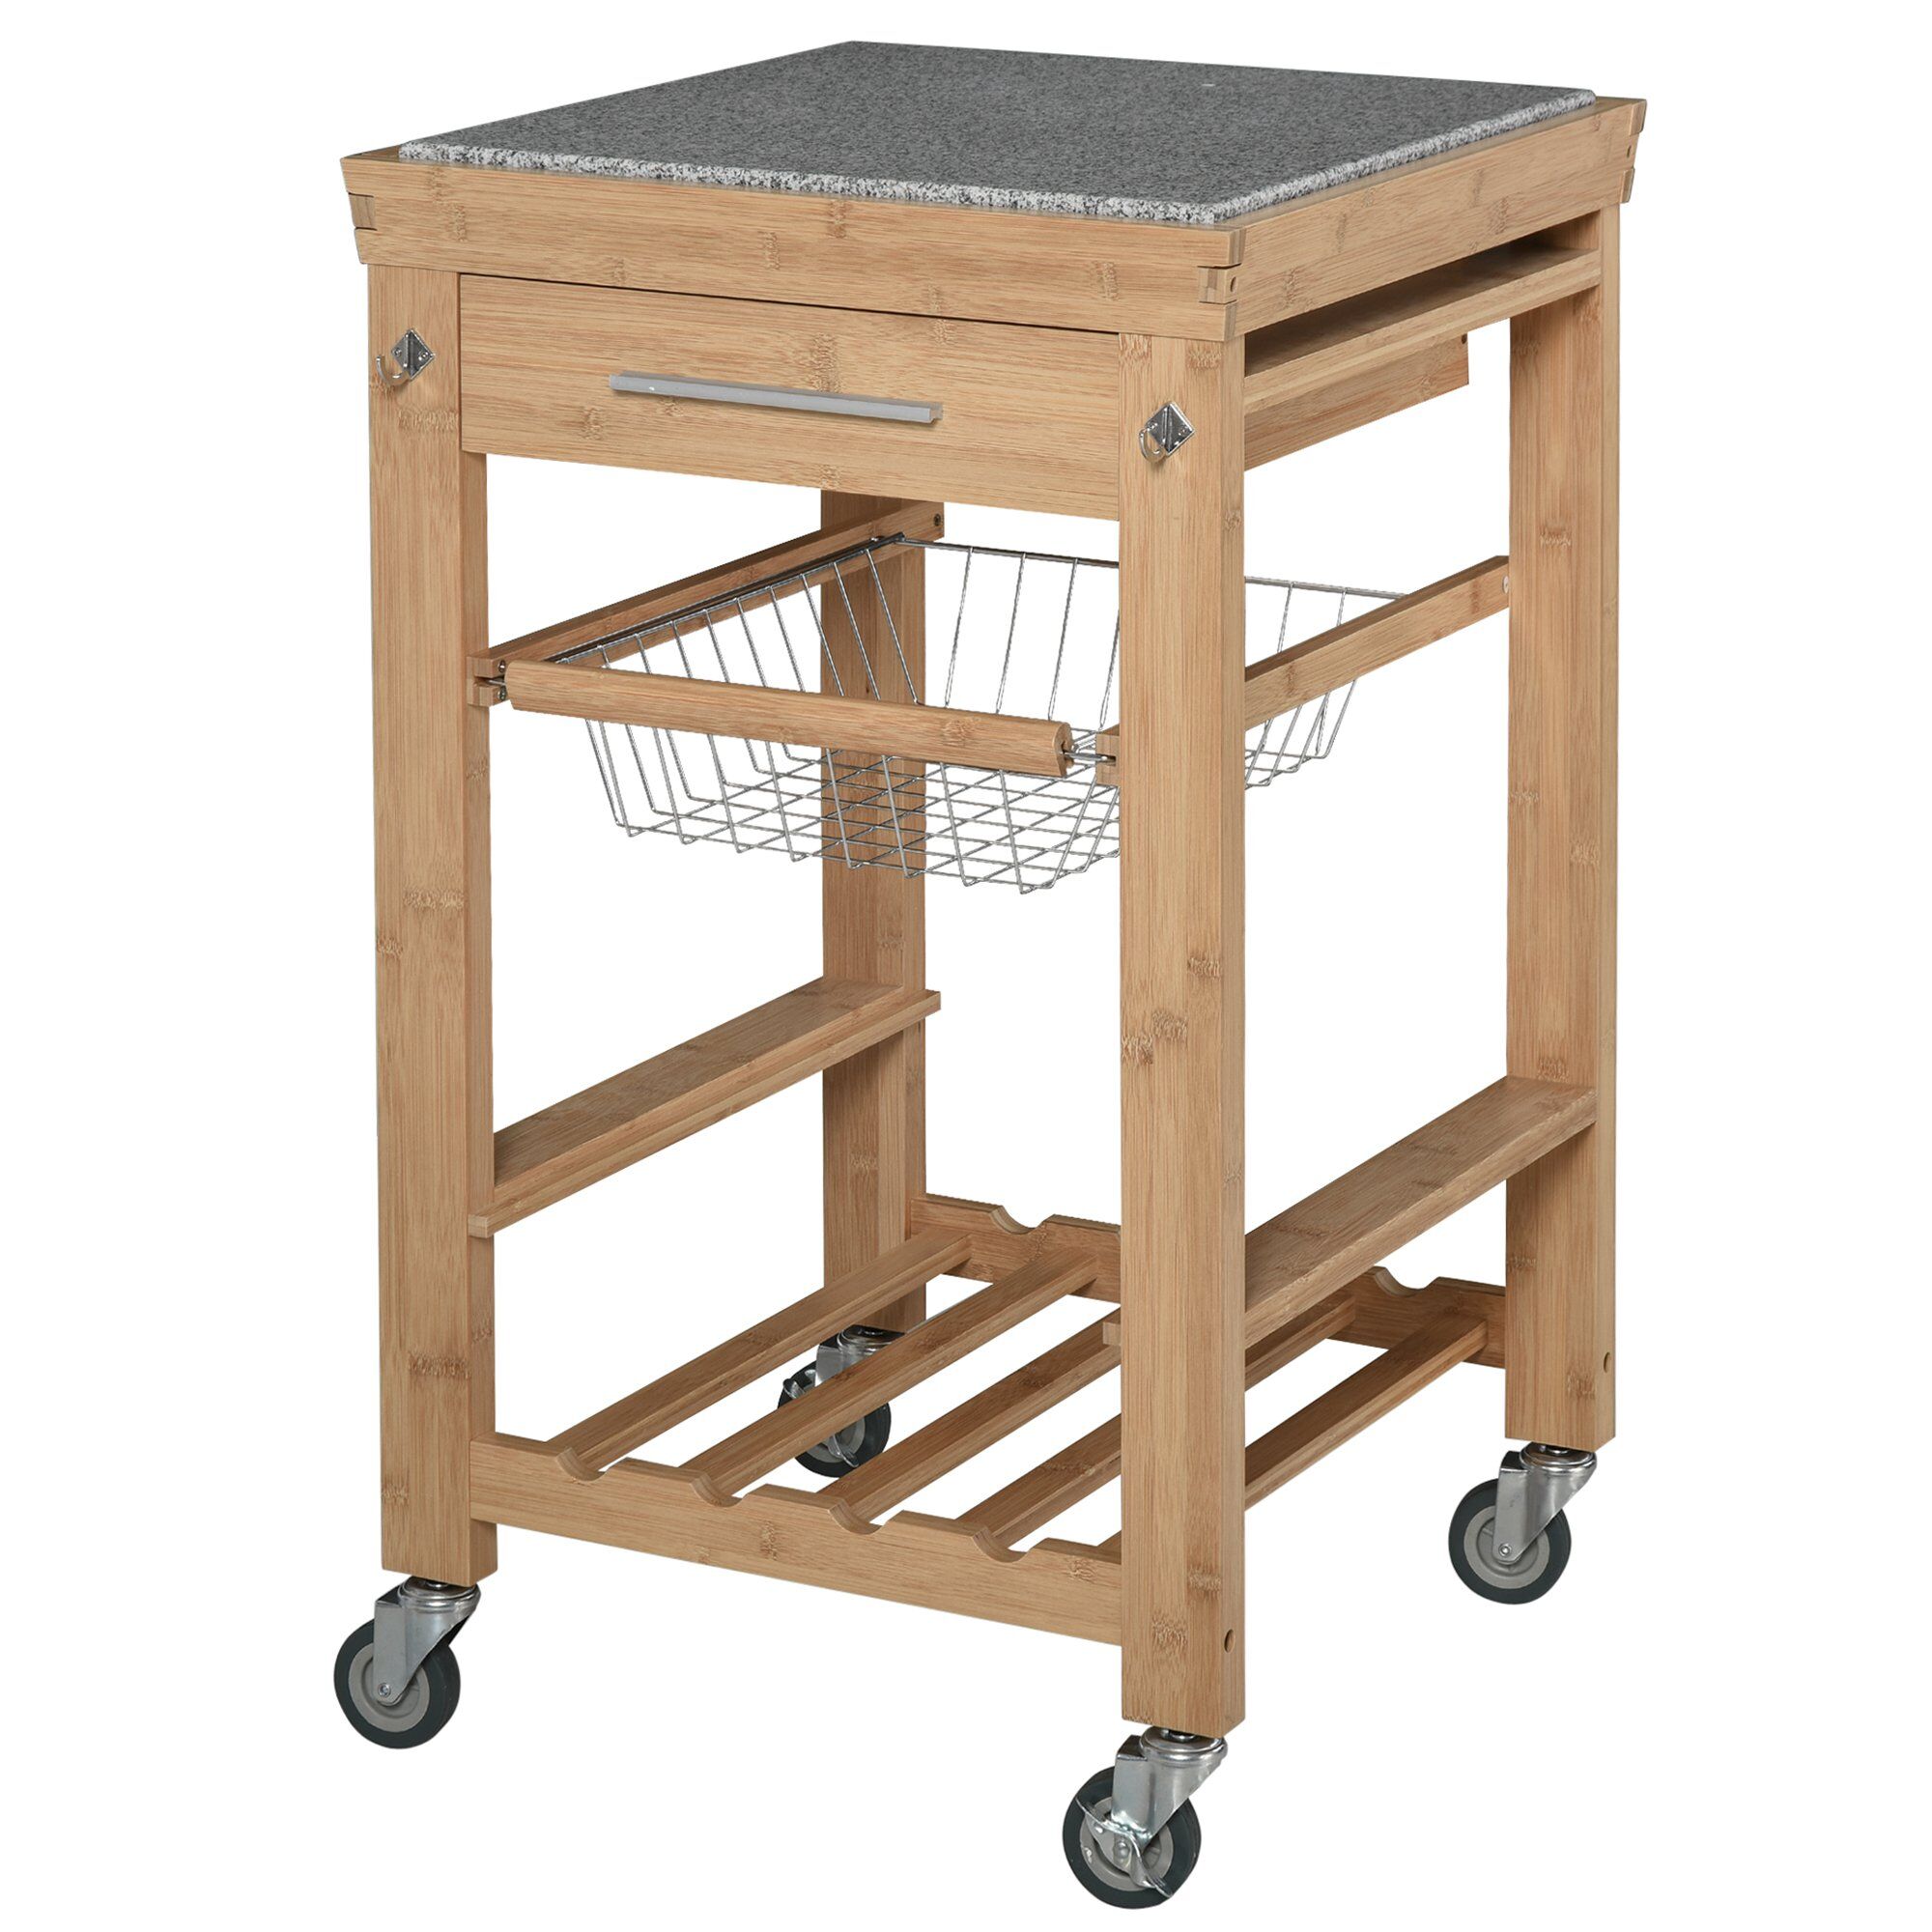 HOMCOM Kitchen Utility Cart on Wheels, Rolling Kitchen Island Cart Mobile Storage Cart with Slide-Out Basket & Wine Storage Rack, Natural/Granite